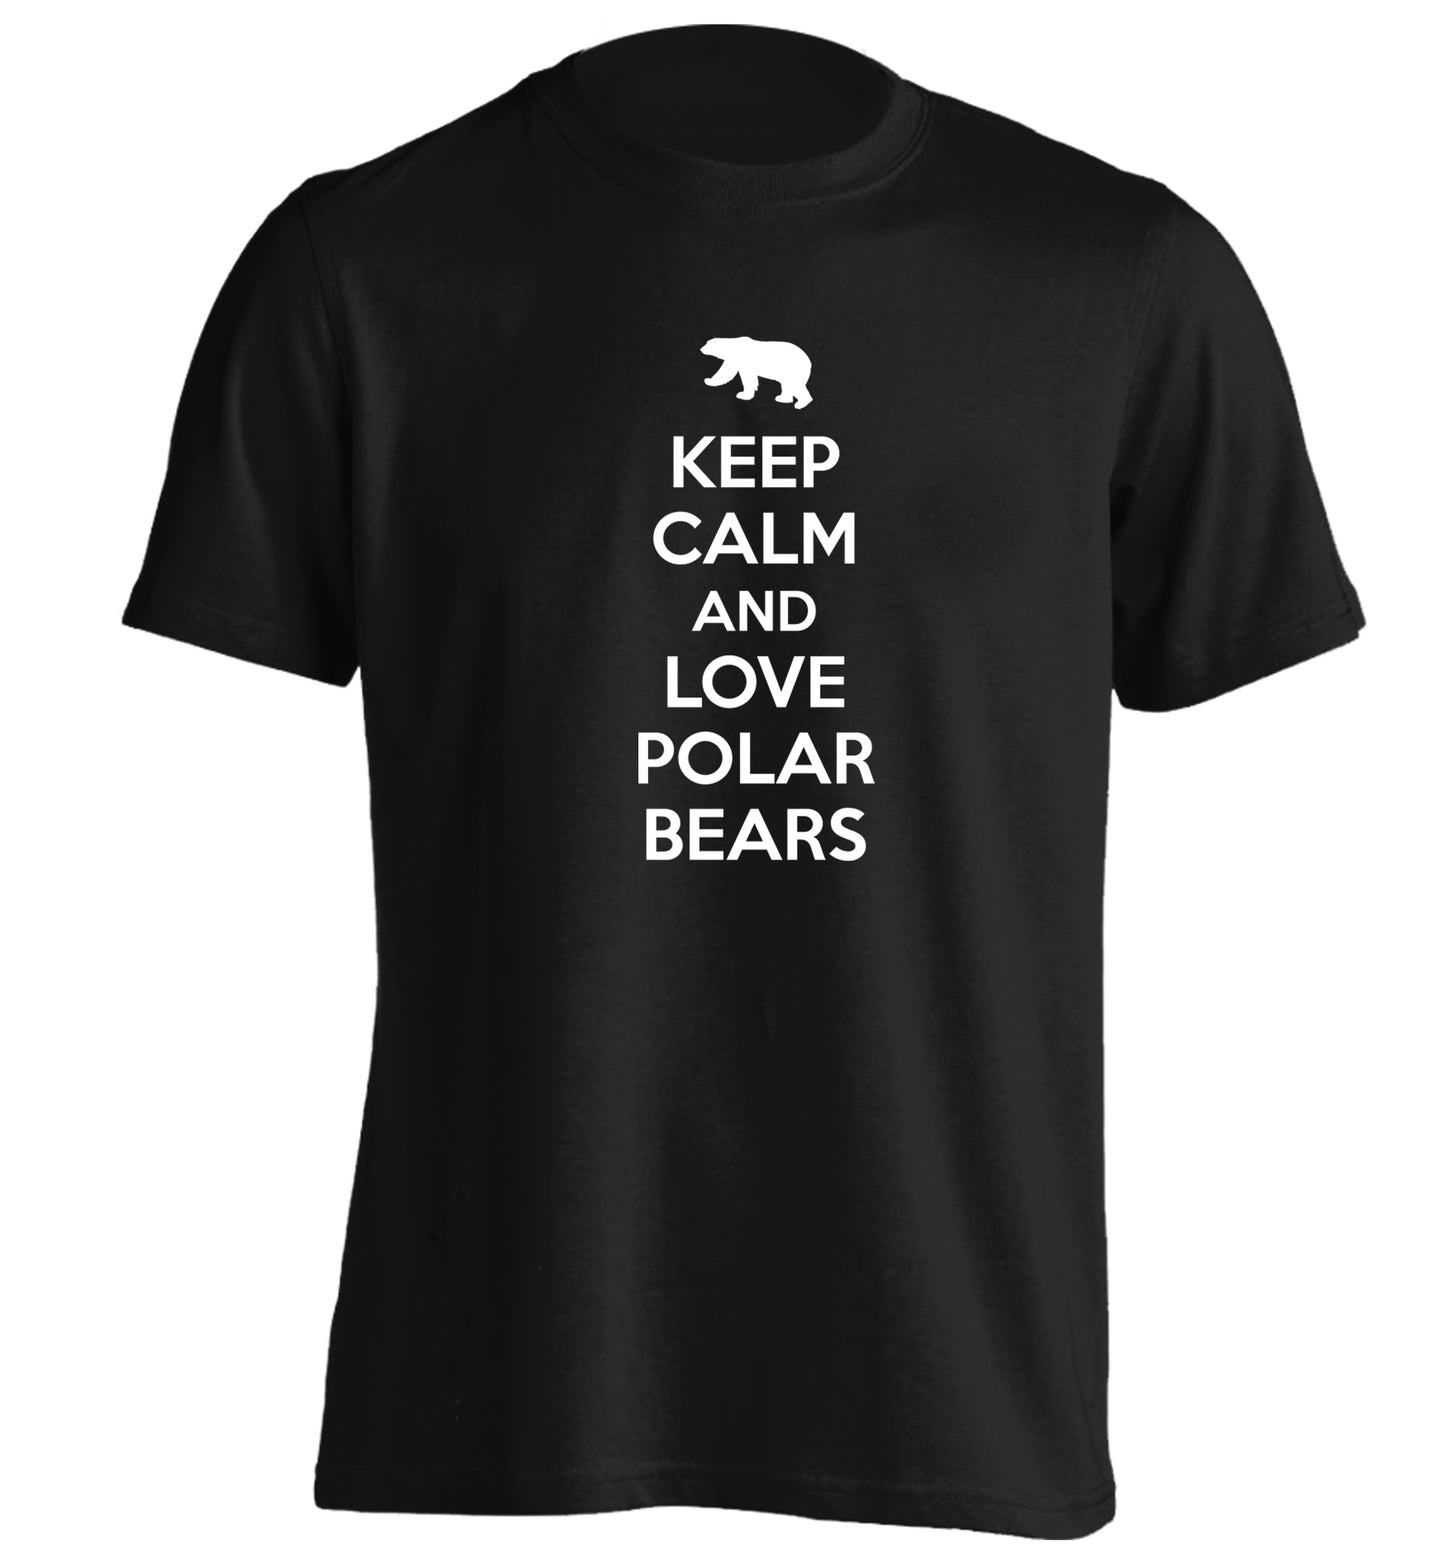 Keep calm and love polar bears adults unisex black Tshirt 2XL